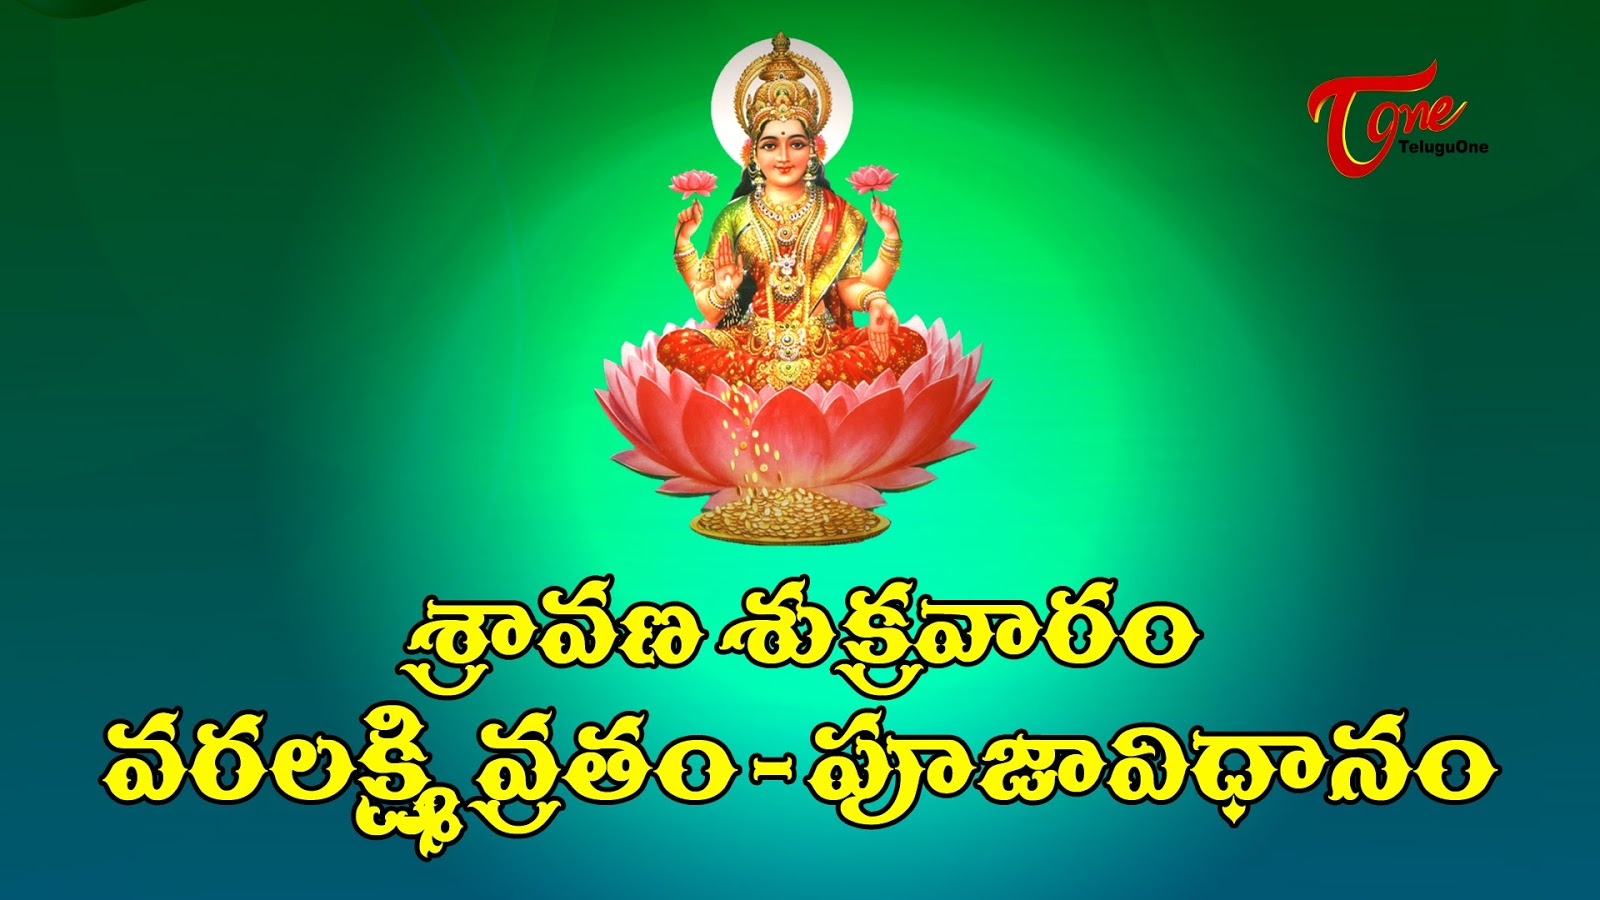 Happy Varalakshmi Vratham wishes.